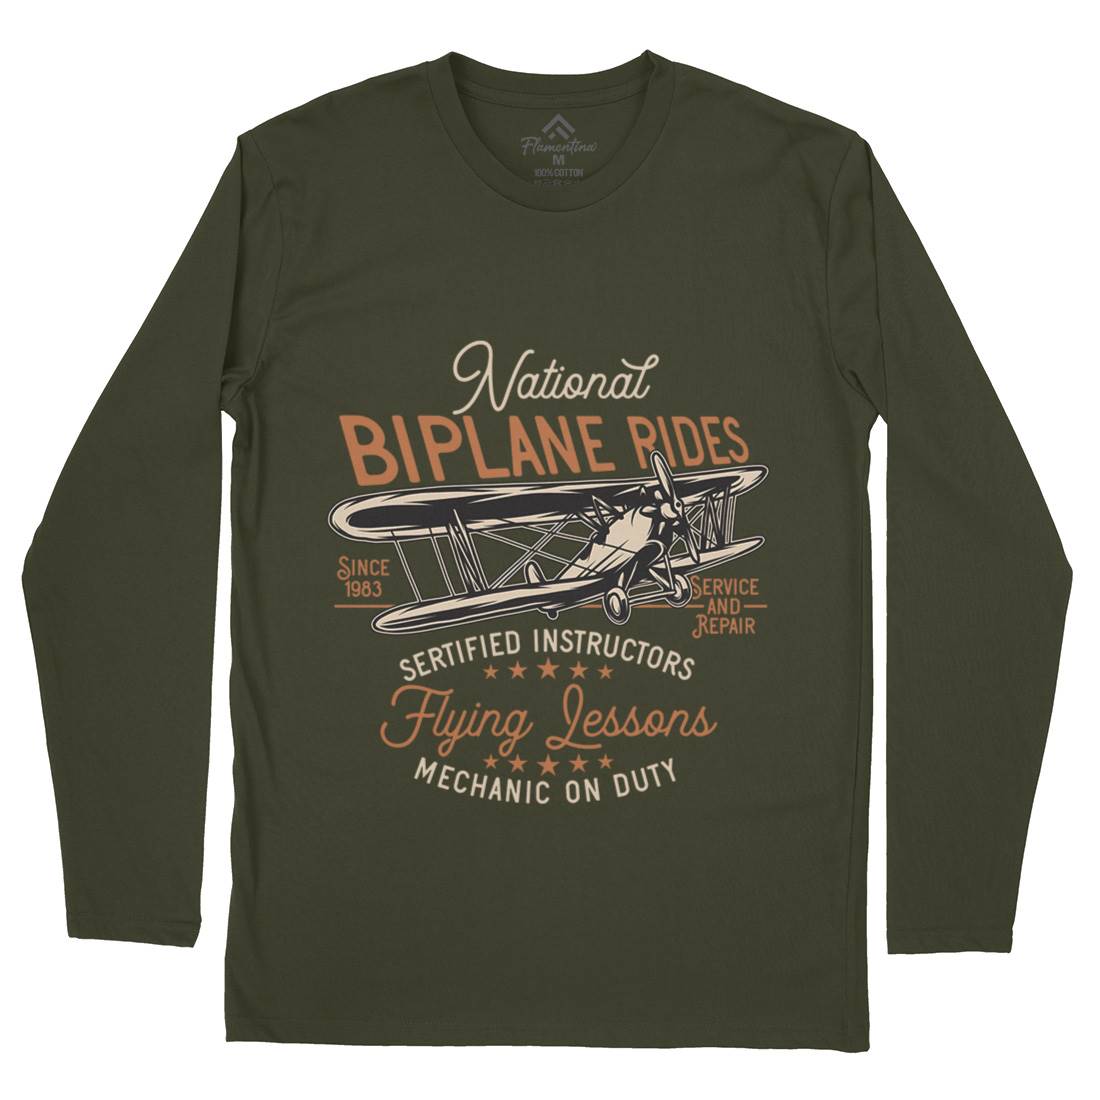 Biplane Rides Mens Long Sleeve T-Shirt Vehicles D910